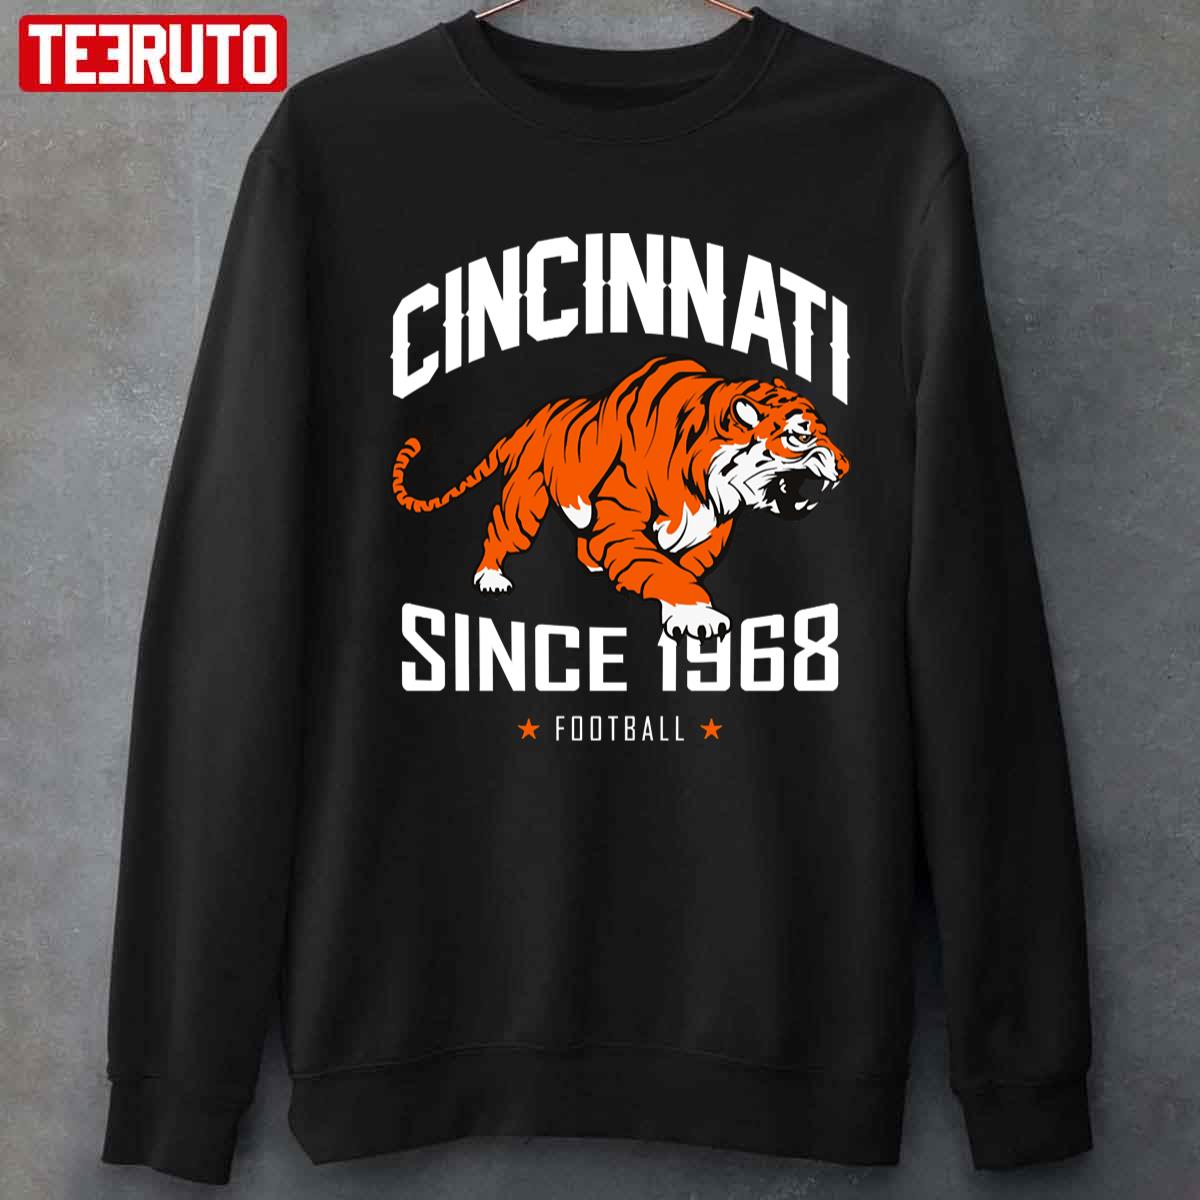 Cincinnati Bengals Shirt Vintage Style Established 1968 - Anynee